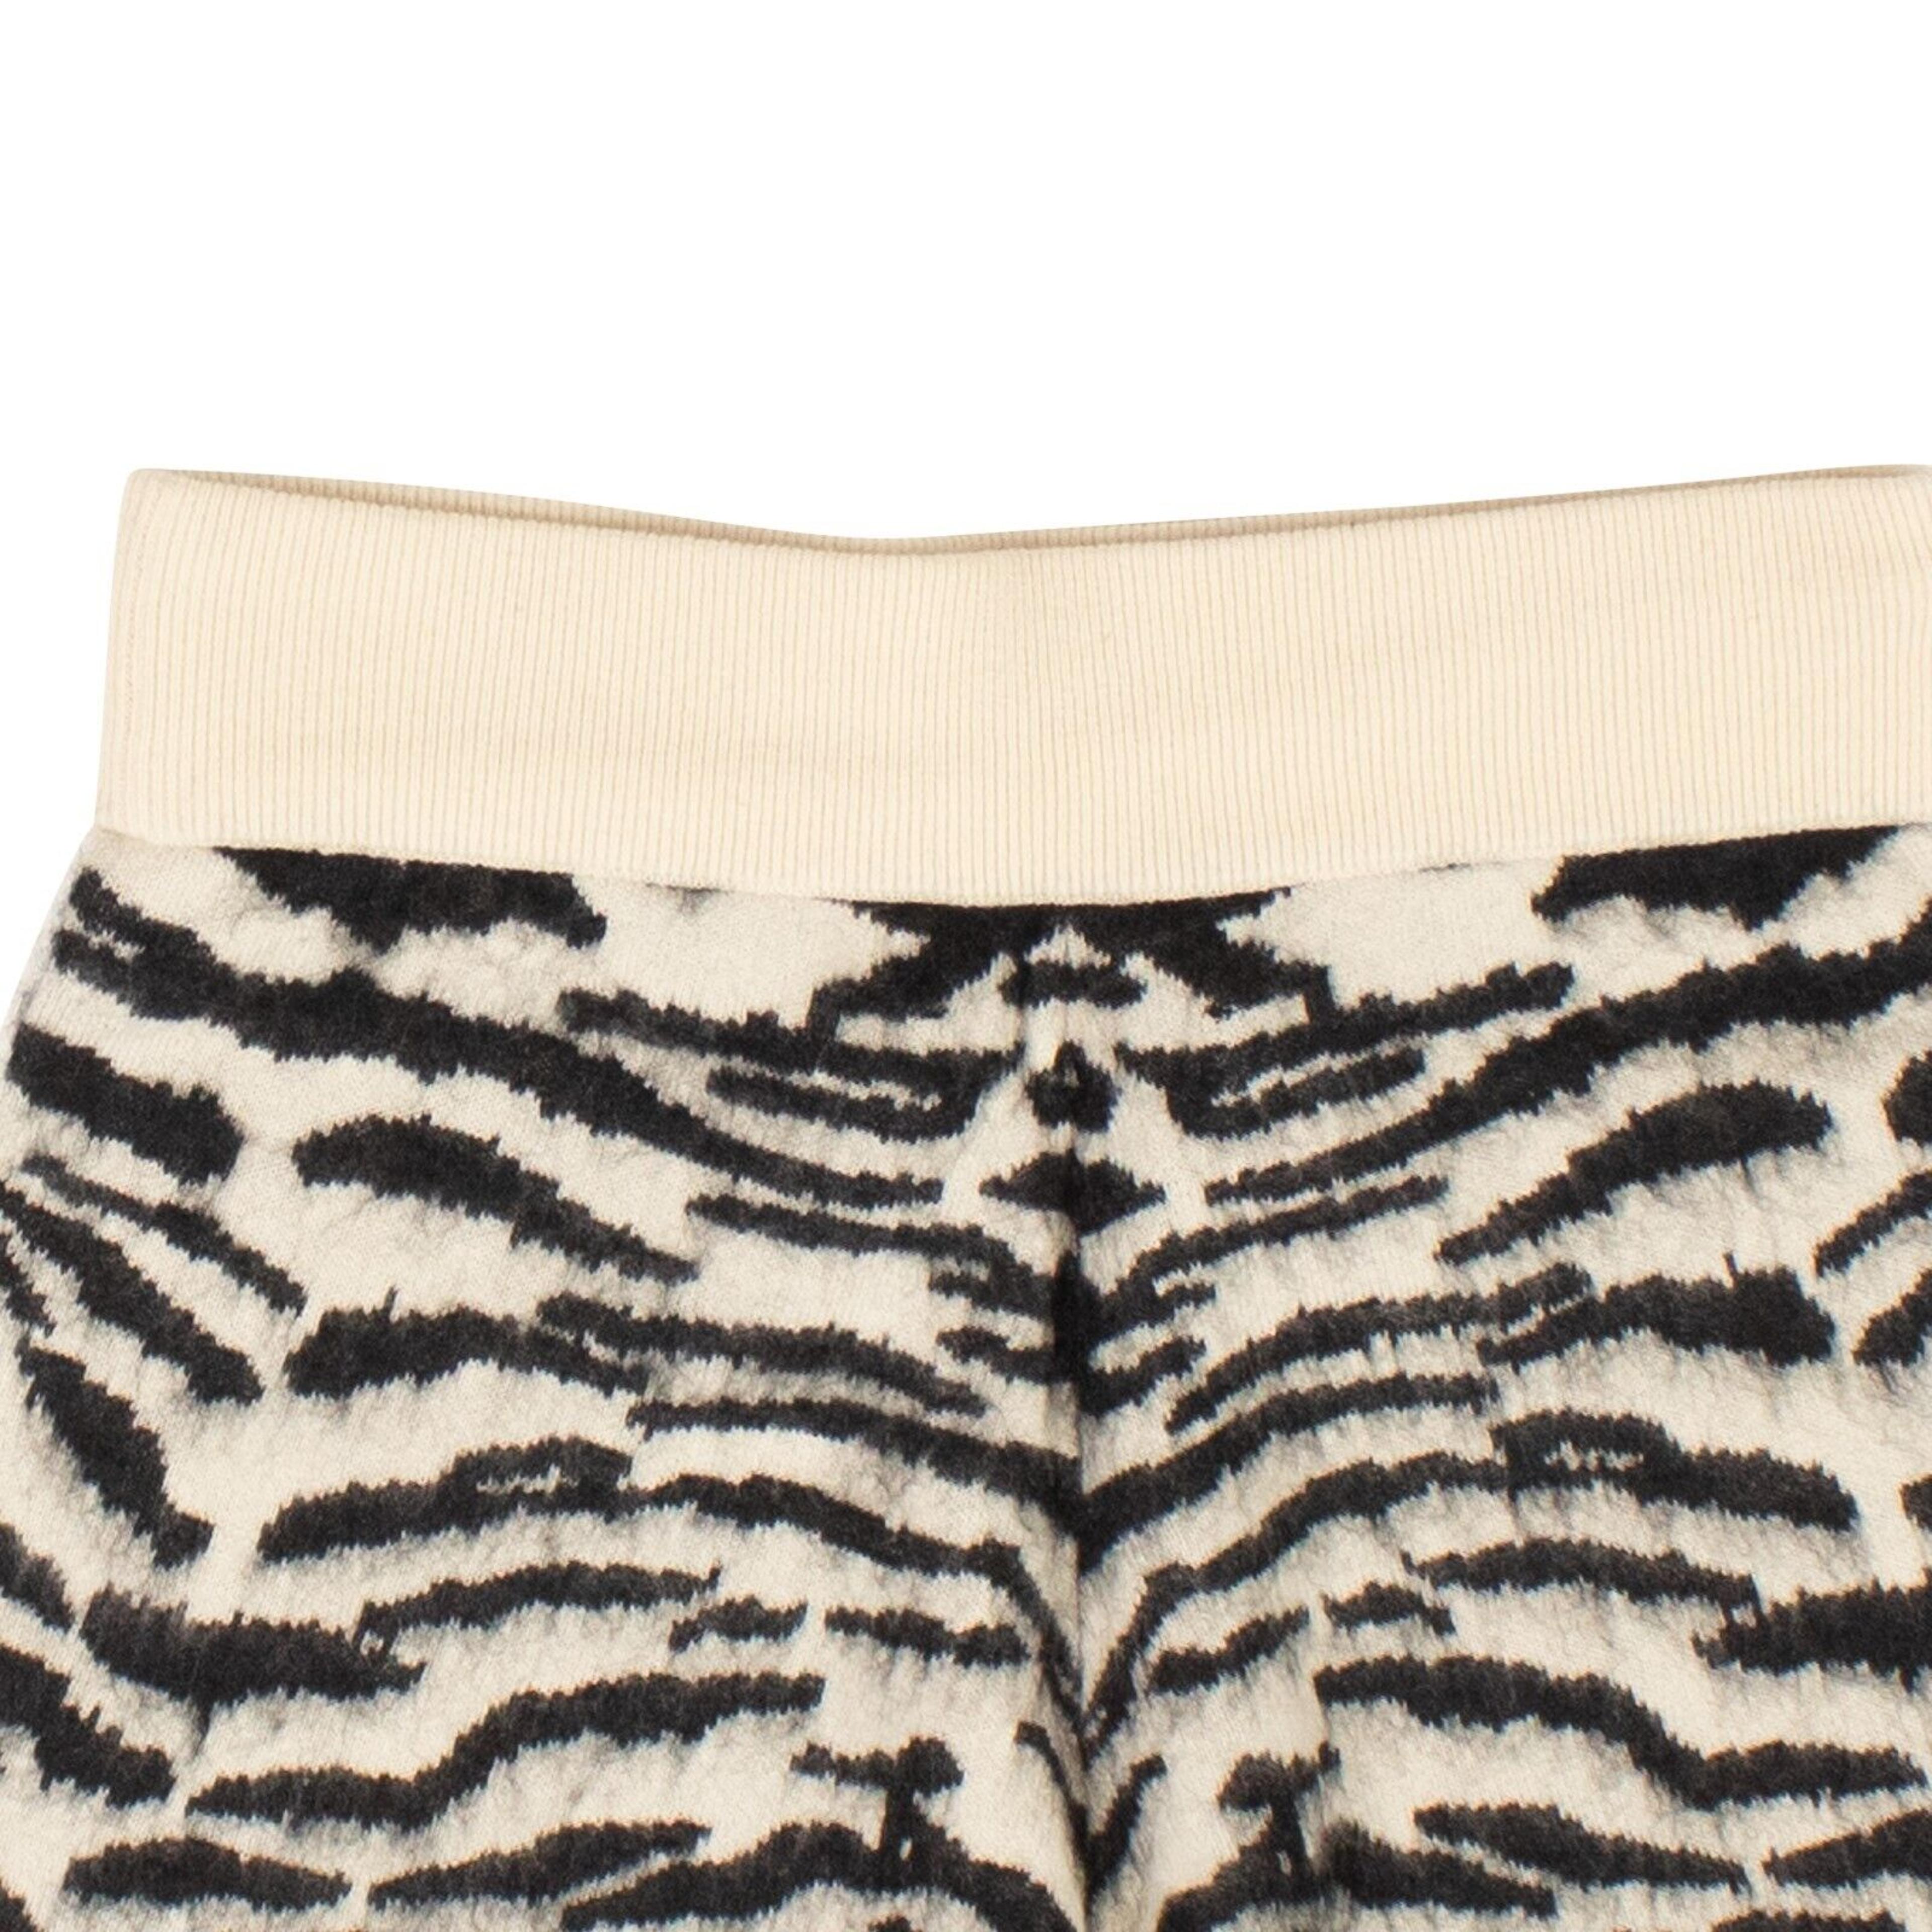 Alternate View 4 of Zebra Animal Jacquard Shorts